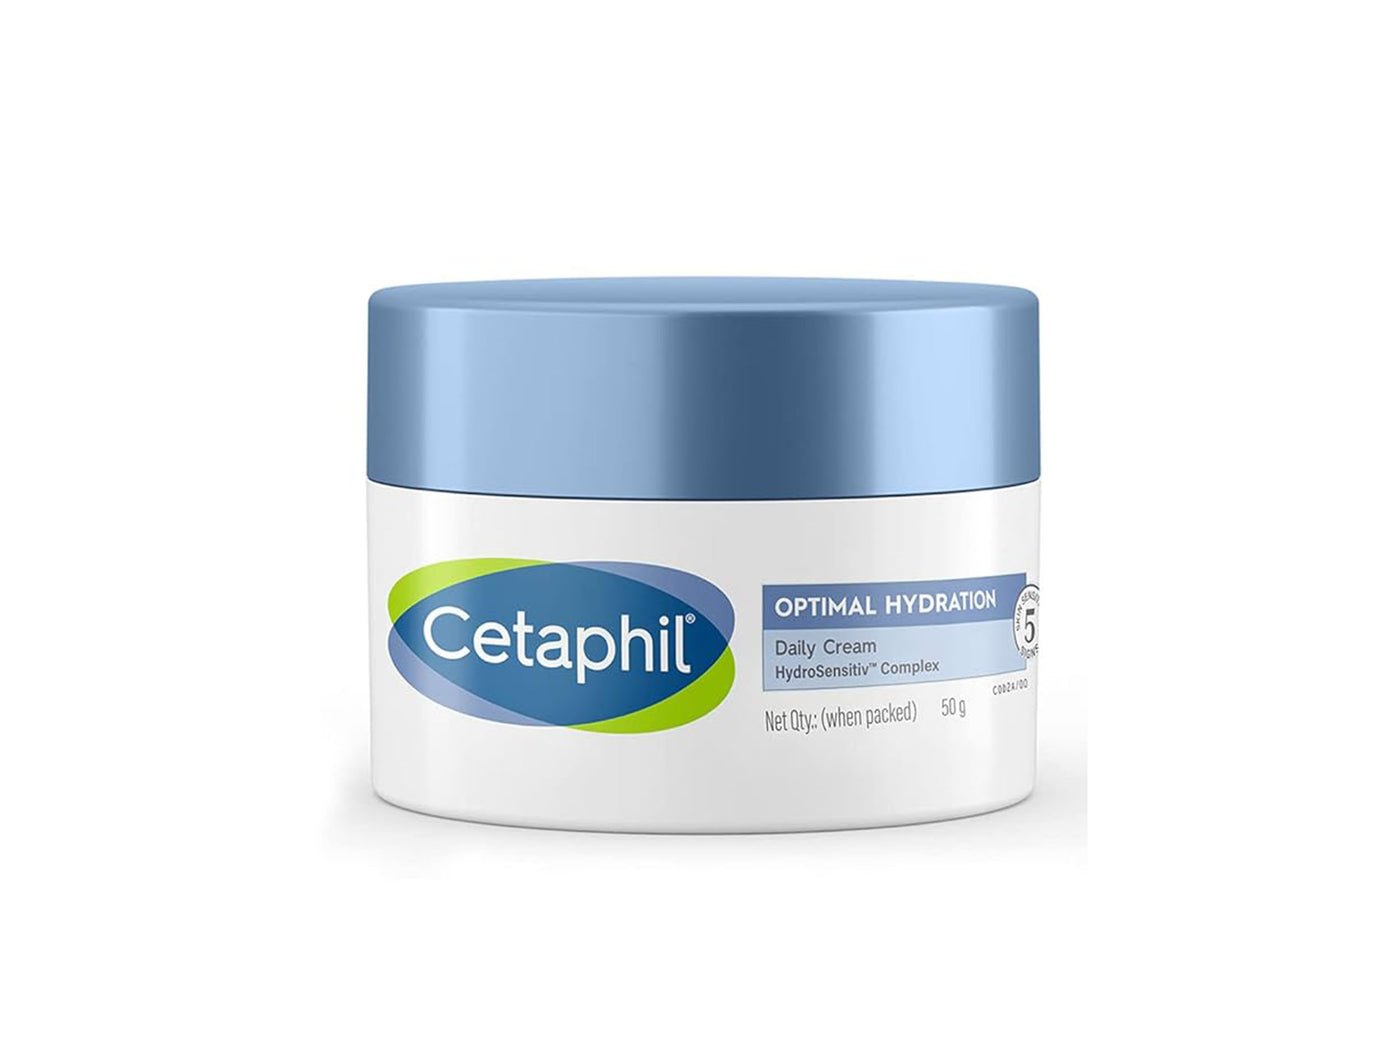 Cetaphil Optimal Hydration Daily Cream - Clinikally